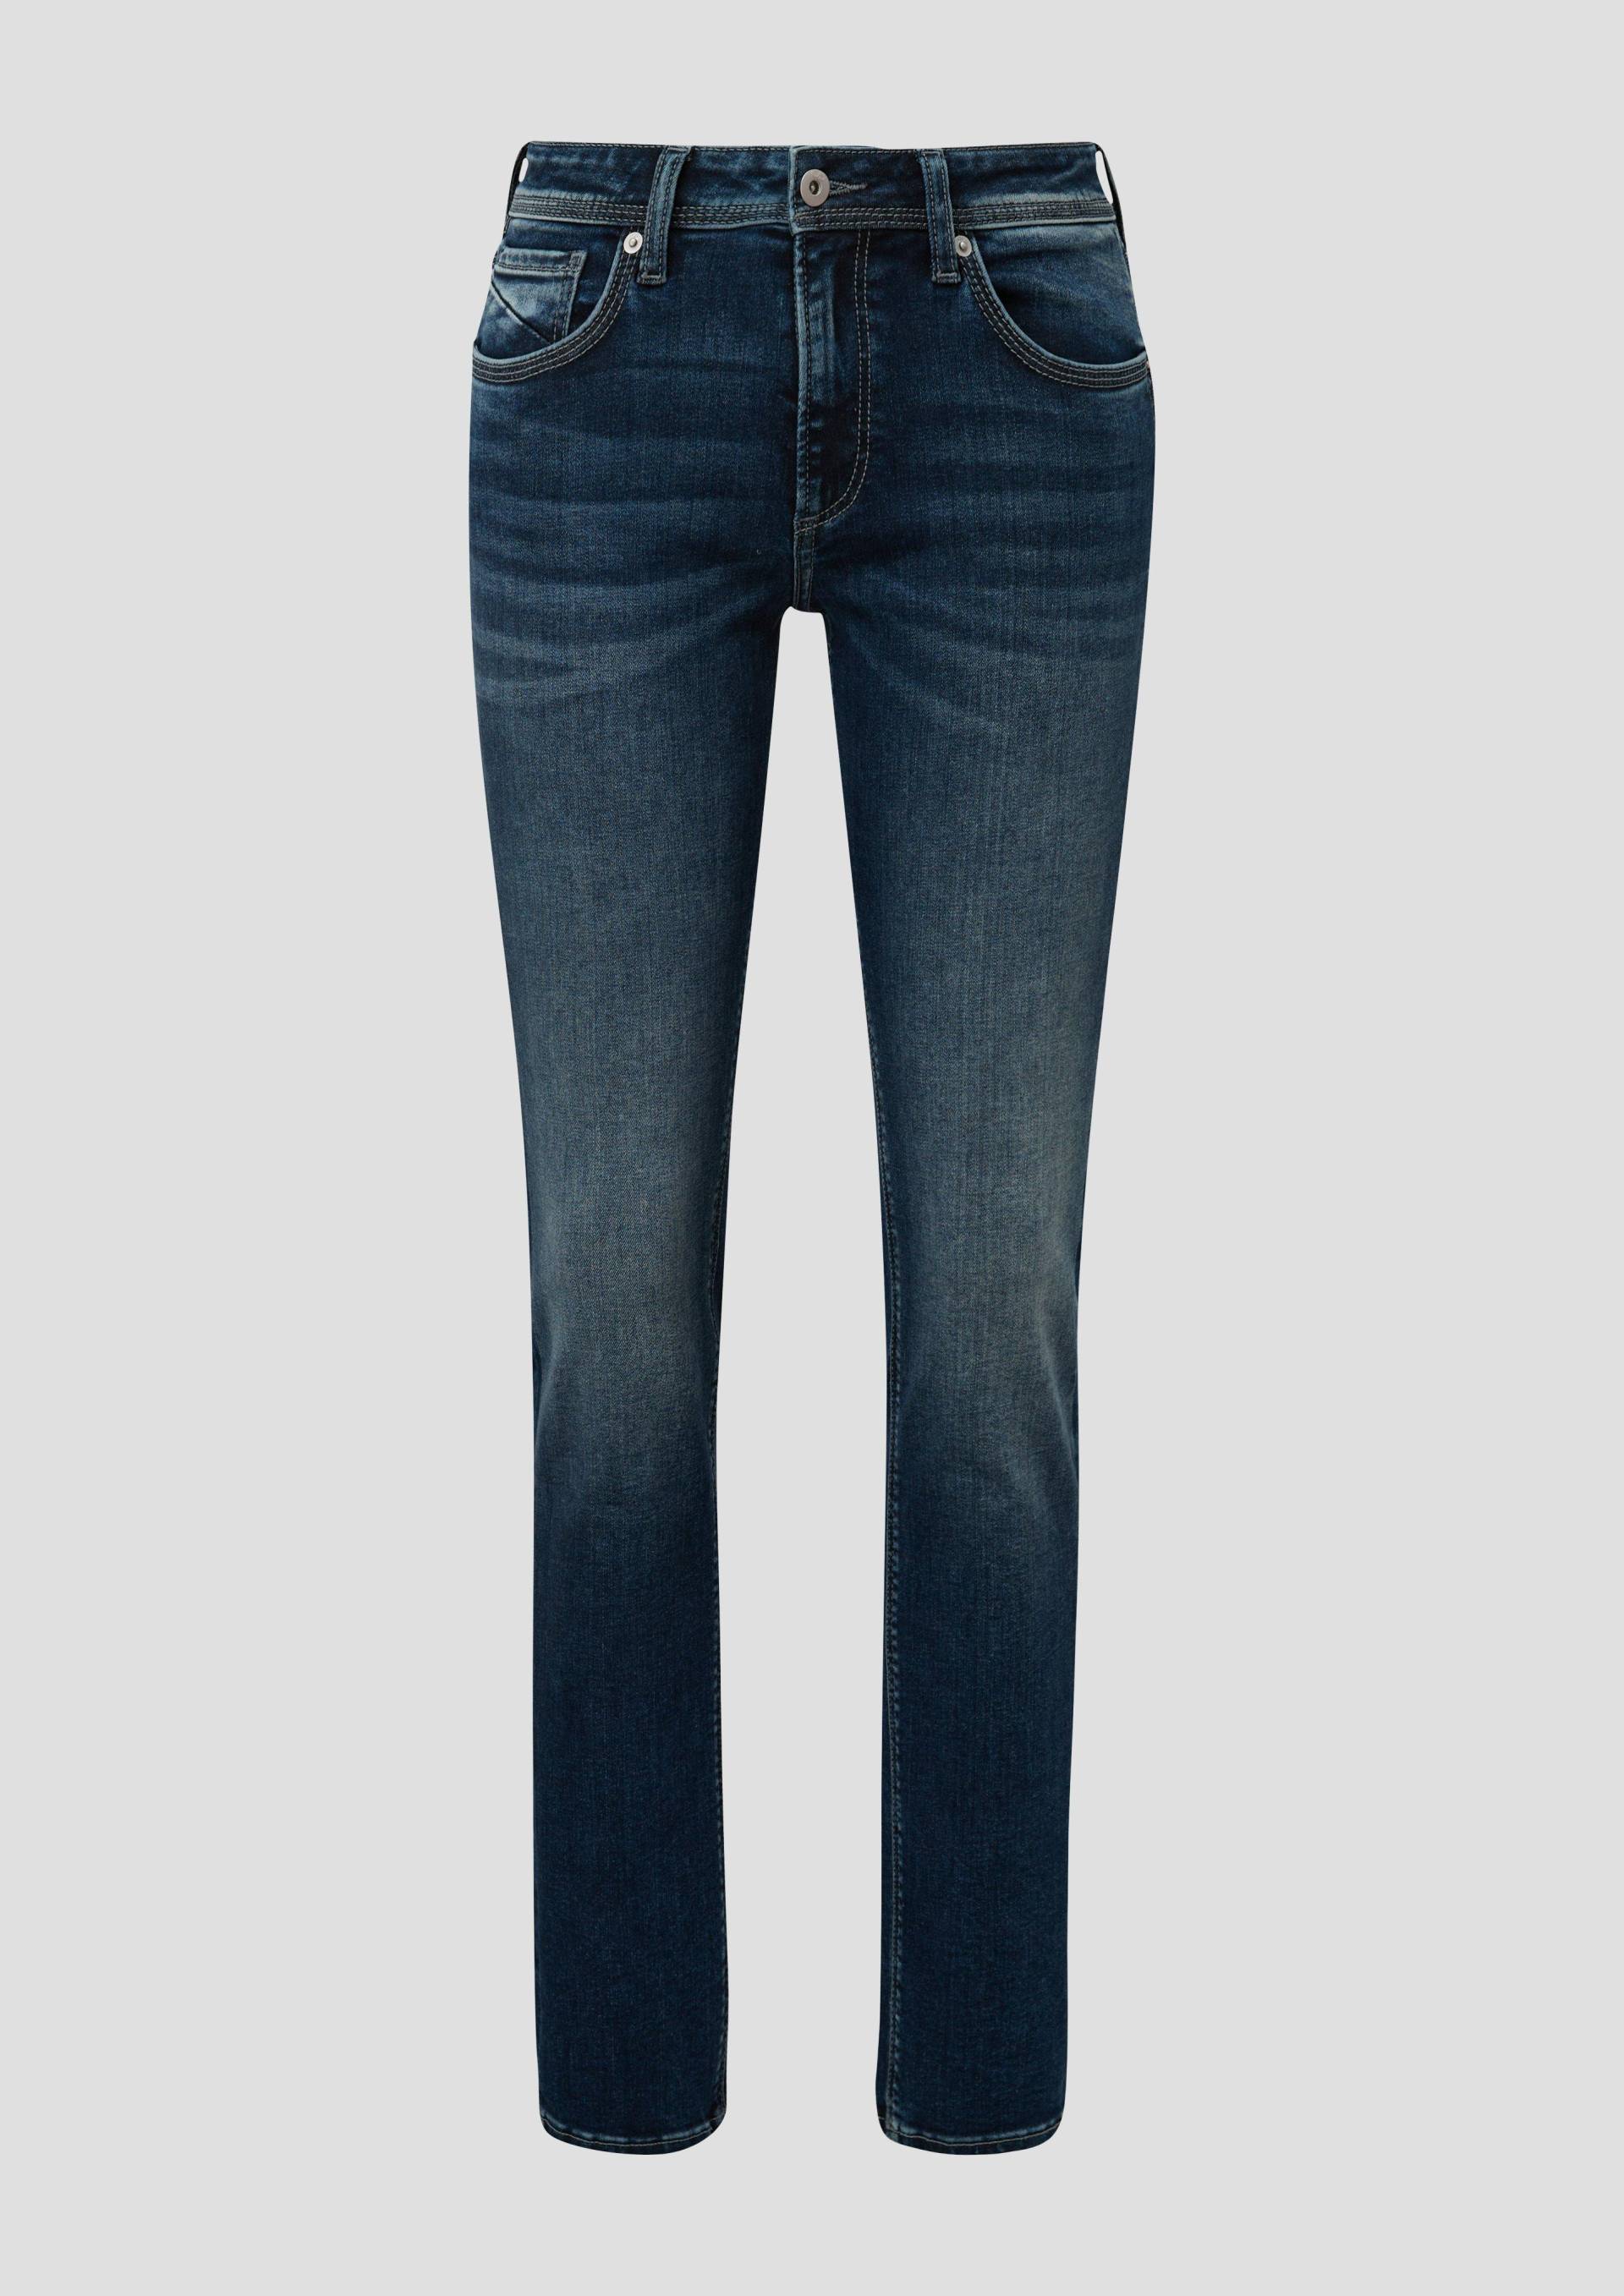 QS - Jeans Catie / Slim Fit / Mid Rise / Slim Leg, Damen, blau von QS